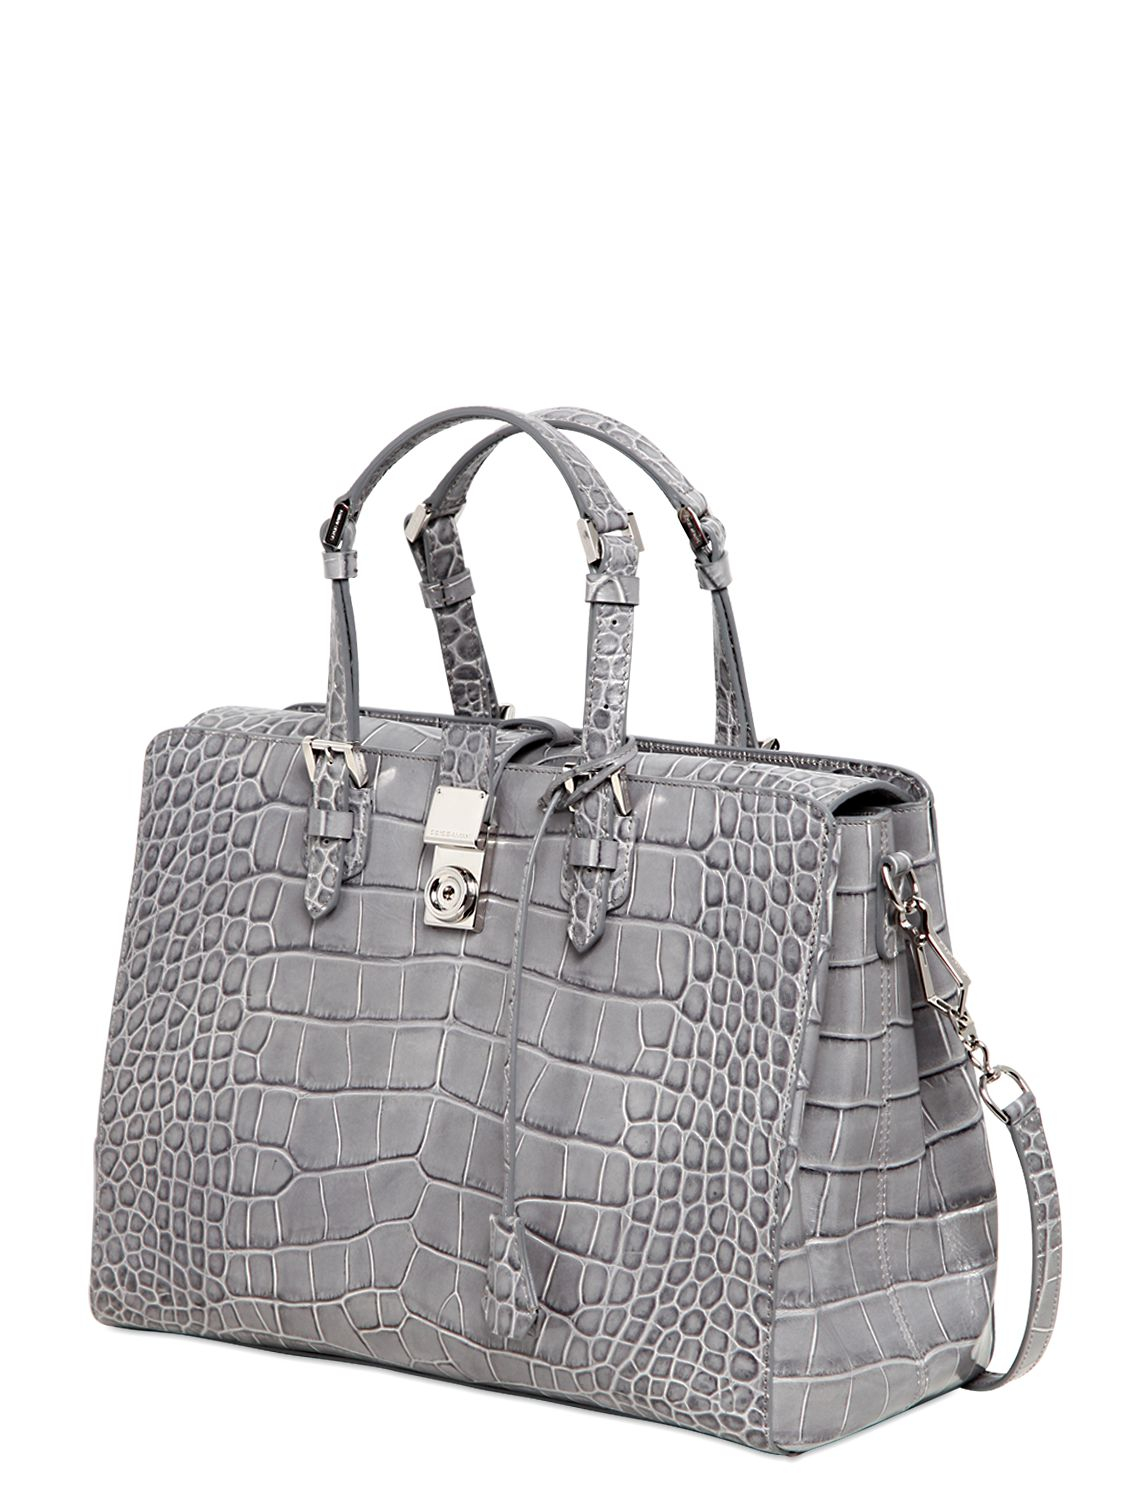 Giorgio Armani Ginevra Printed Leather Top Handle Bag in Light Grey (Gray) - Lyst